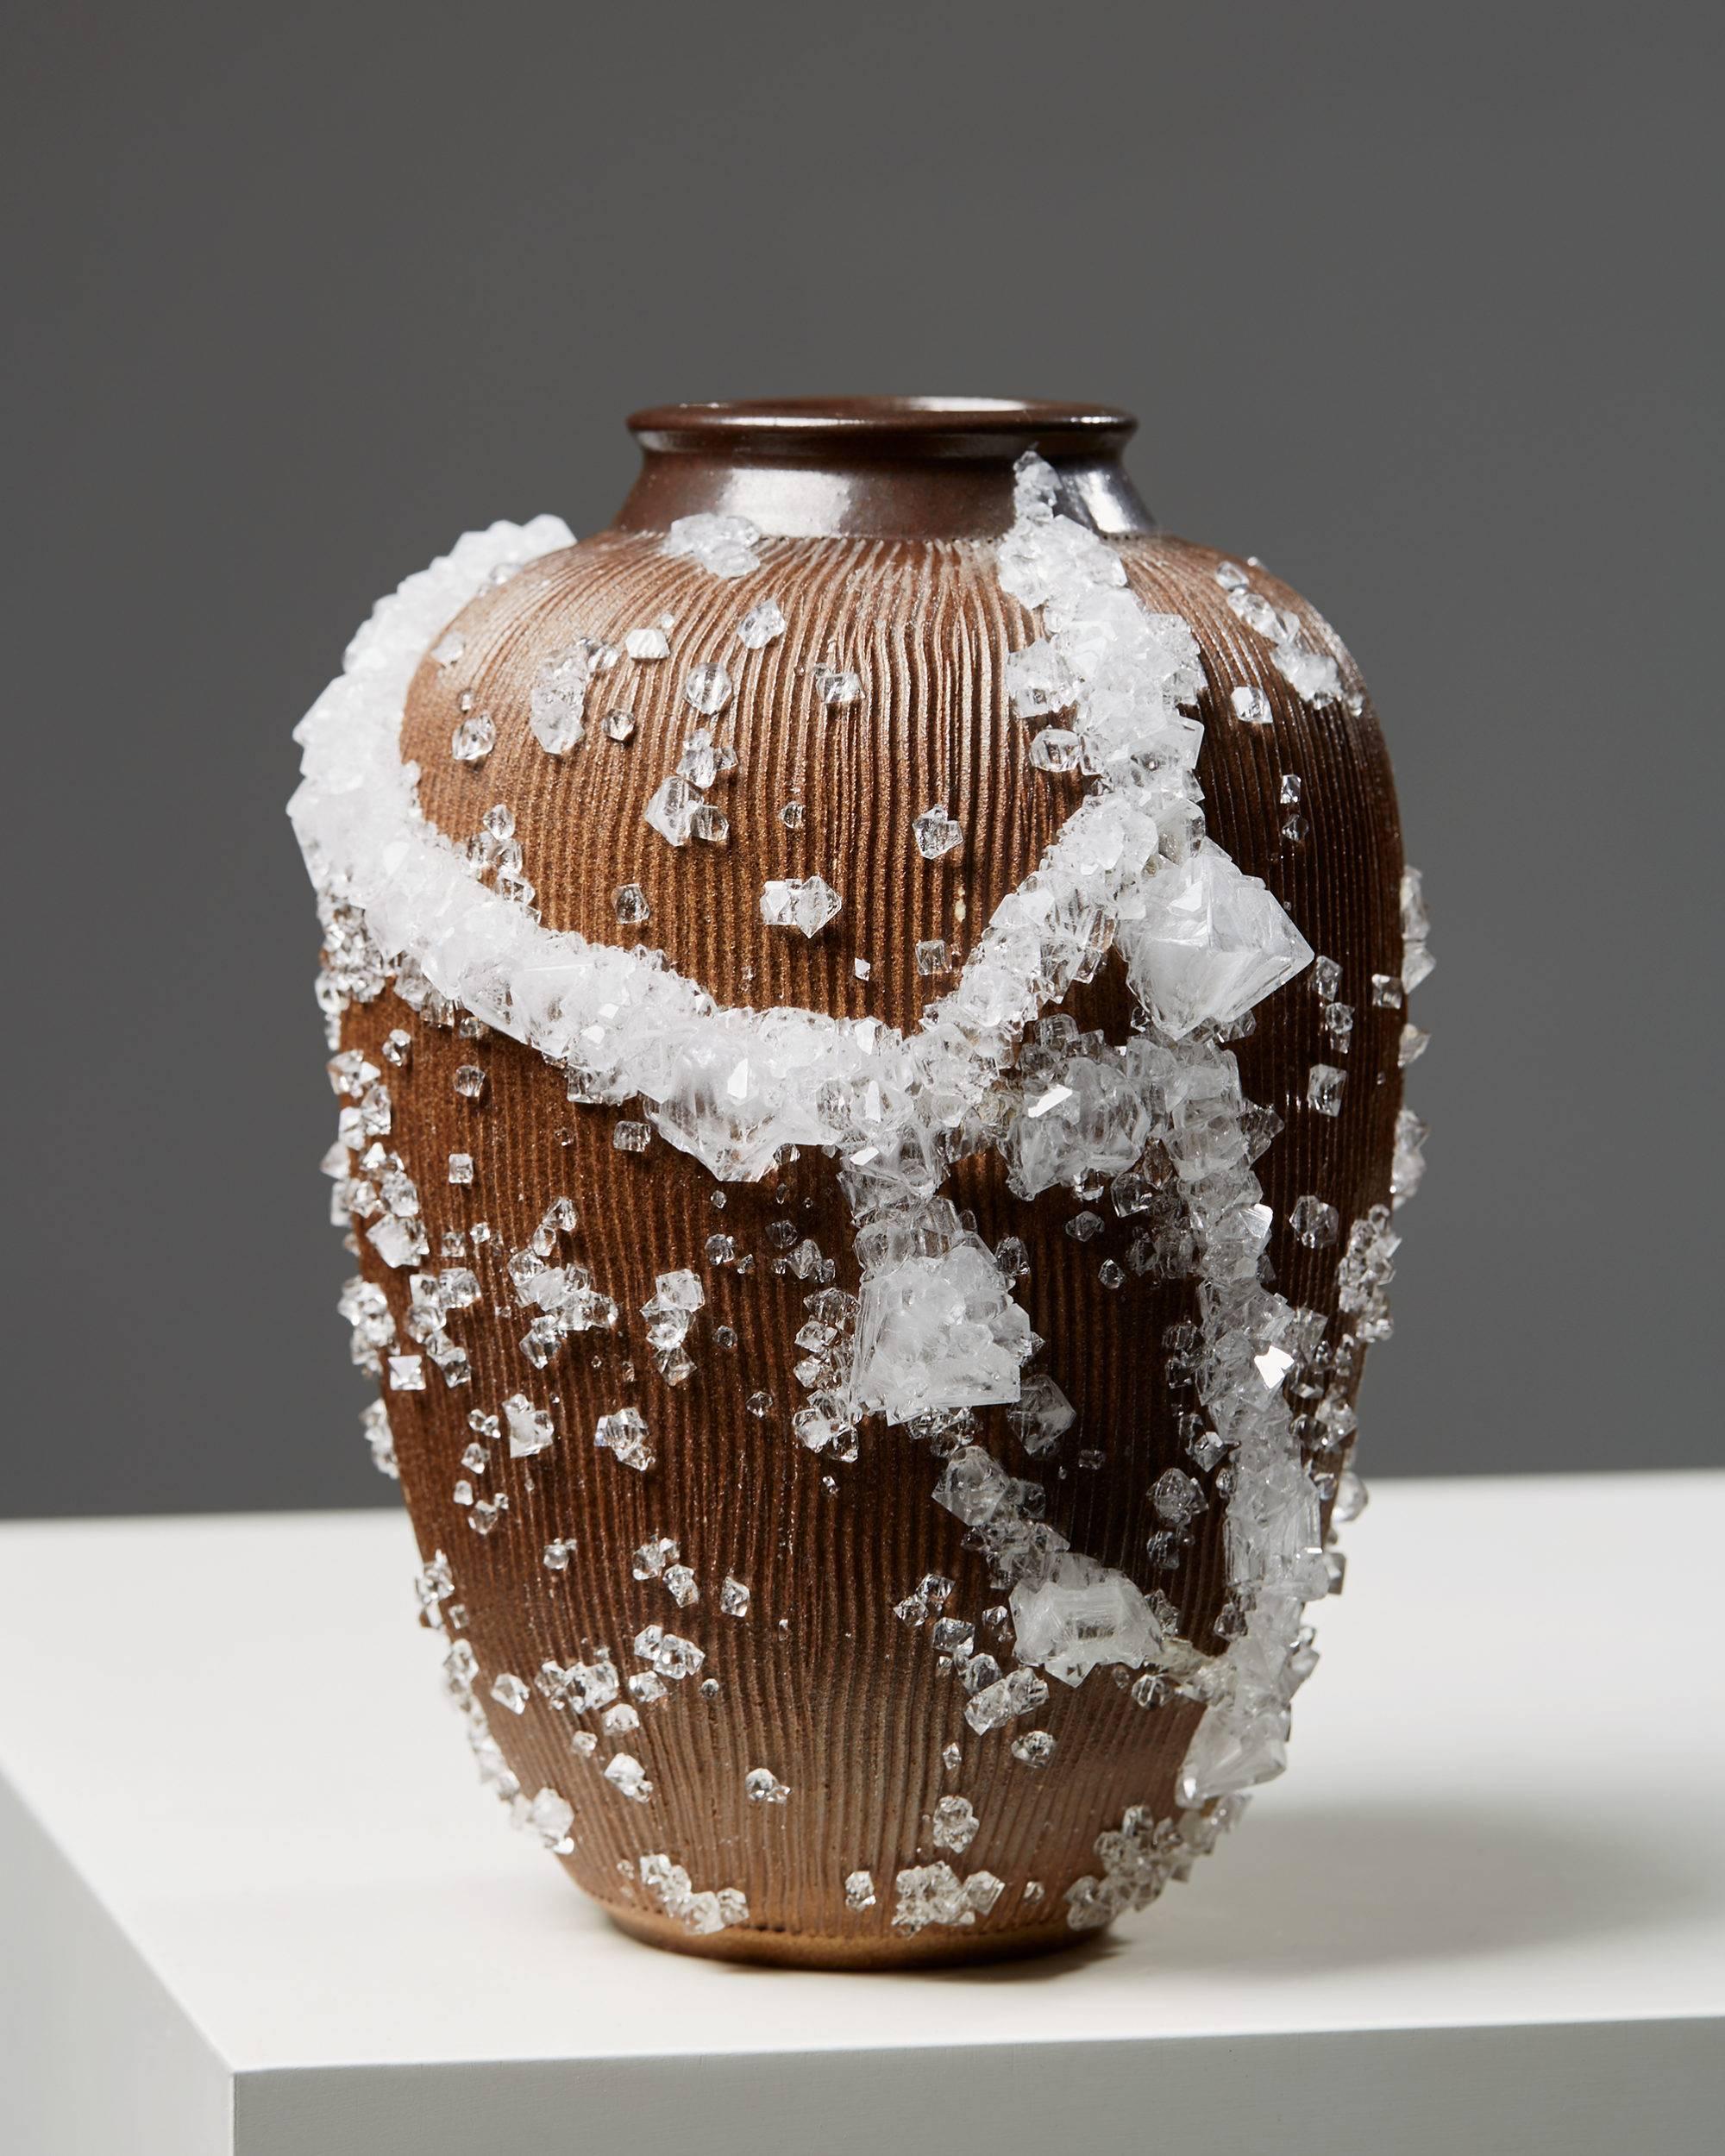 Vase by Lukas Wegwerth, Germany. Stoneware and salt crystals

Measures: H 19 cm / 7 1/2''.